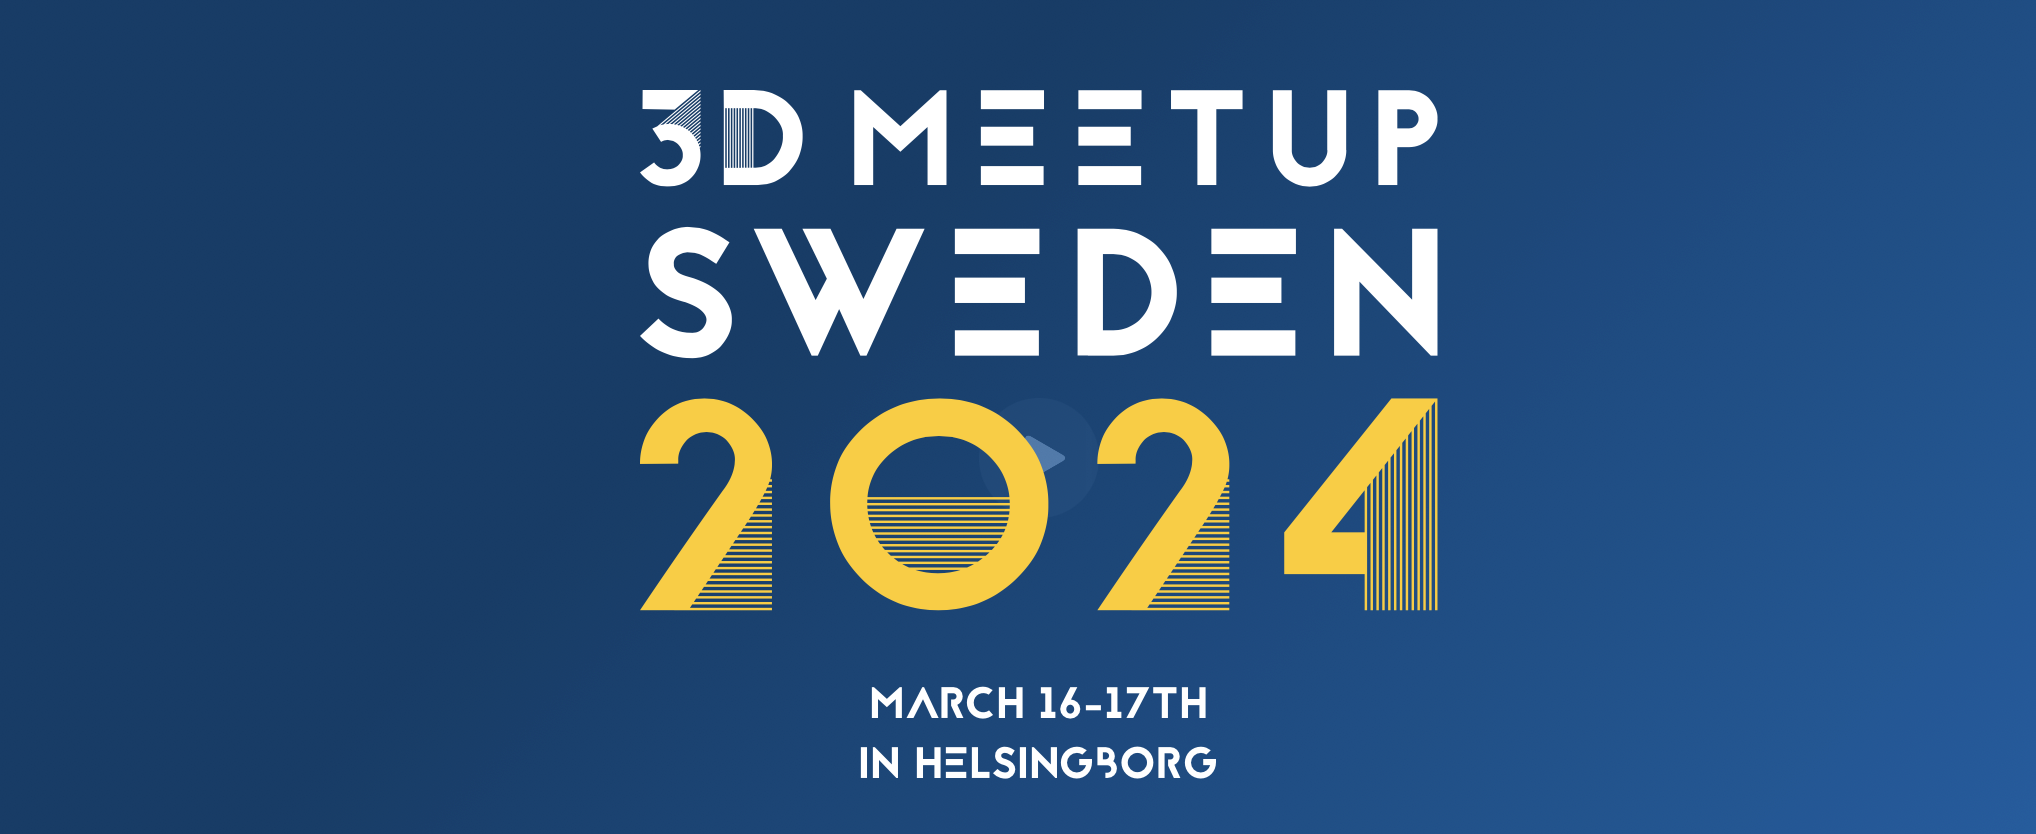 3D Meetup Sverige